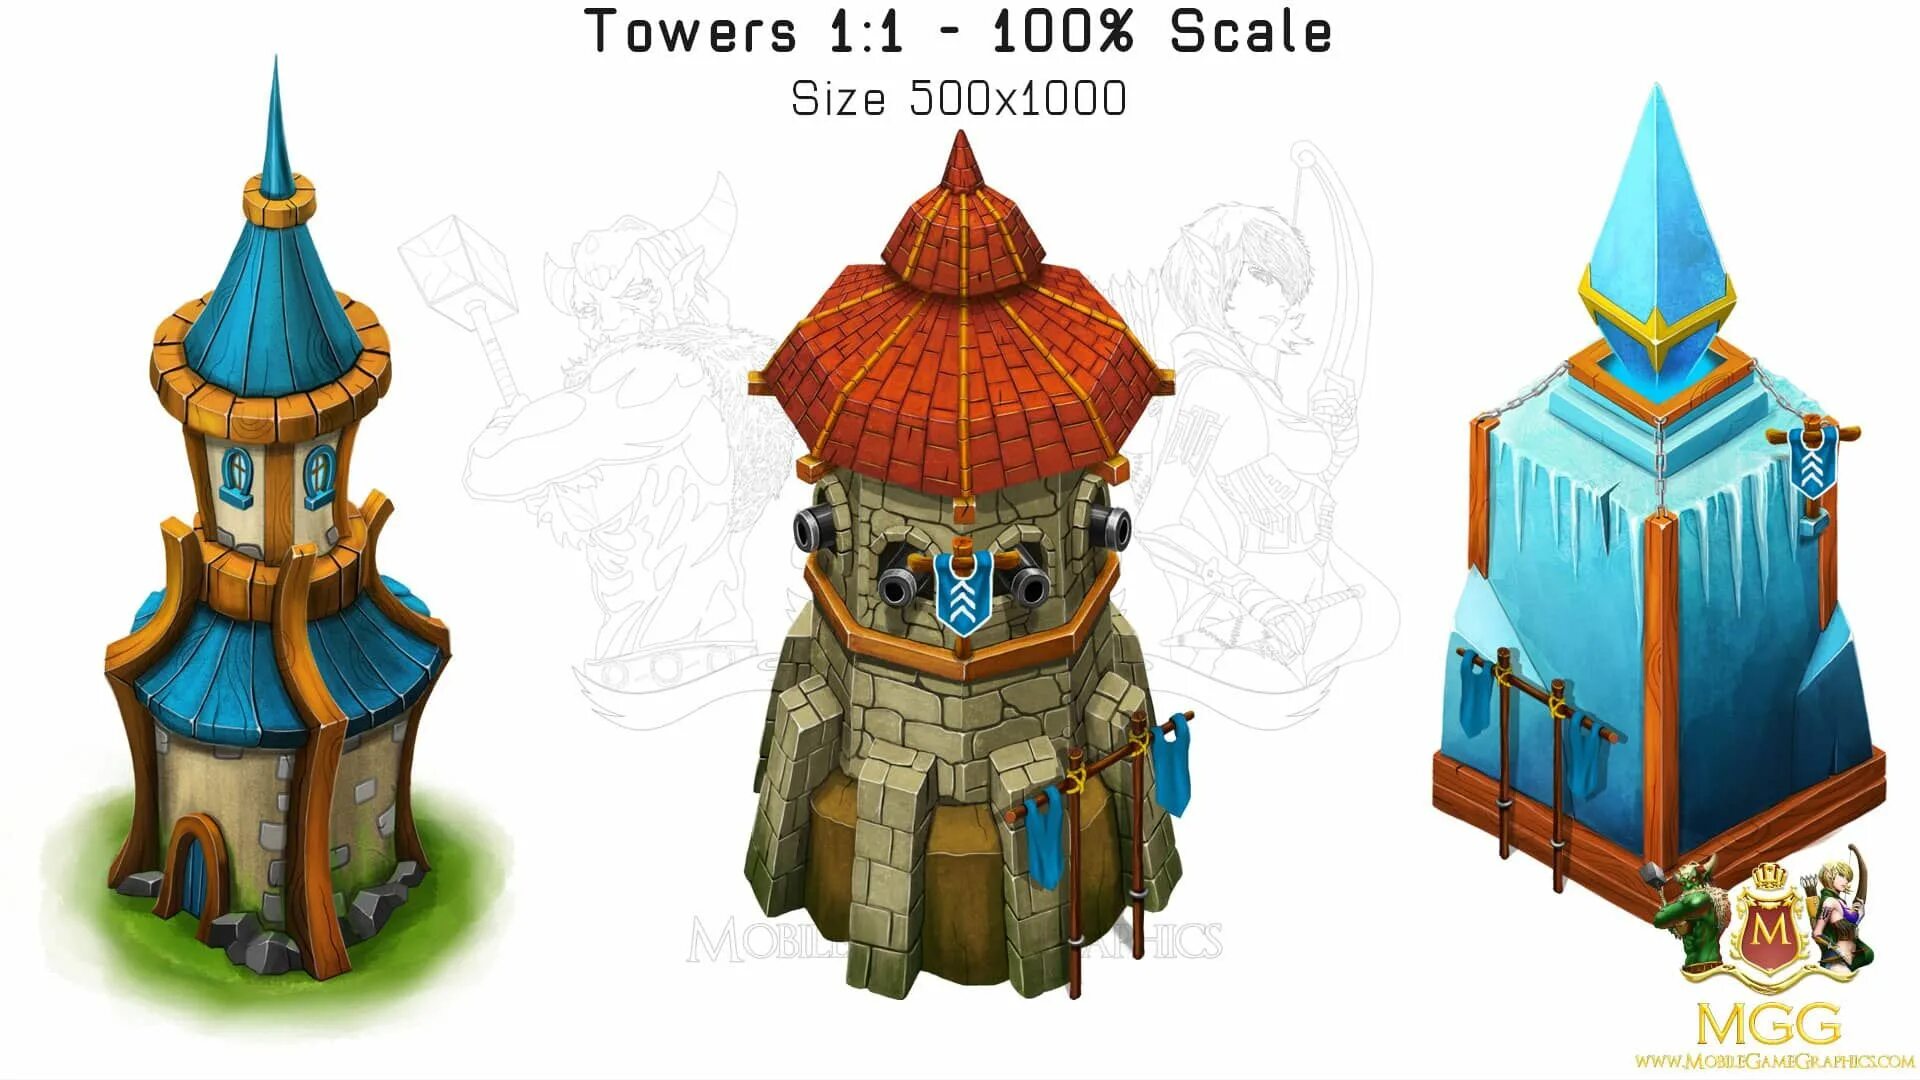 Tower sprites. Спрайт башни для Tower Defense. Tower Defense изометрия. Башня мага Тауэр дефенс. Башня спрайт.